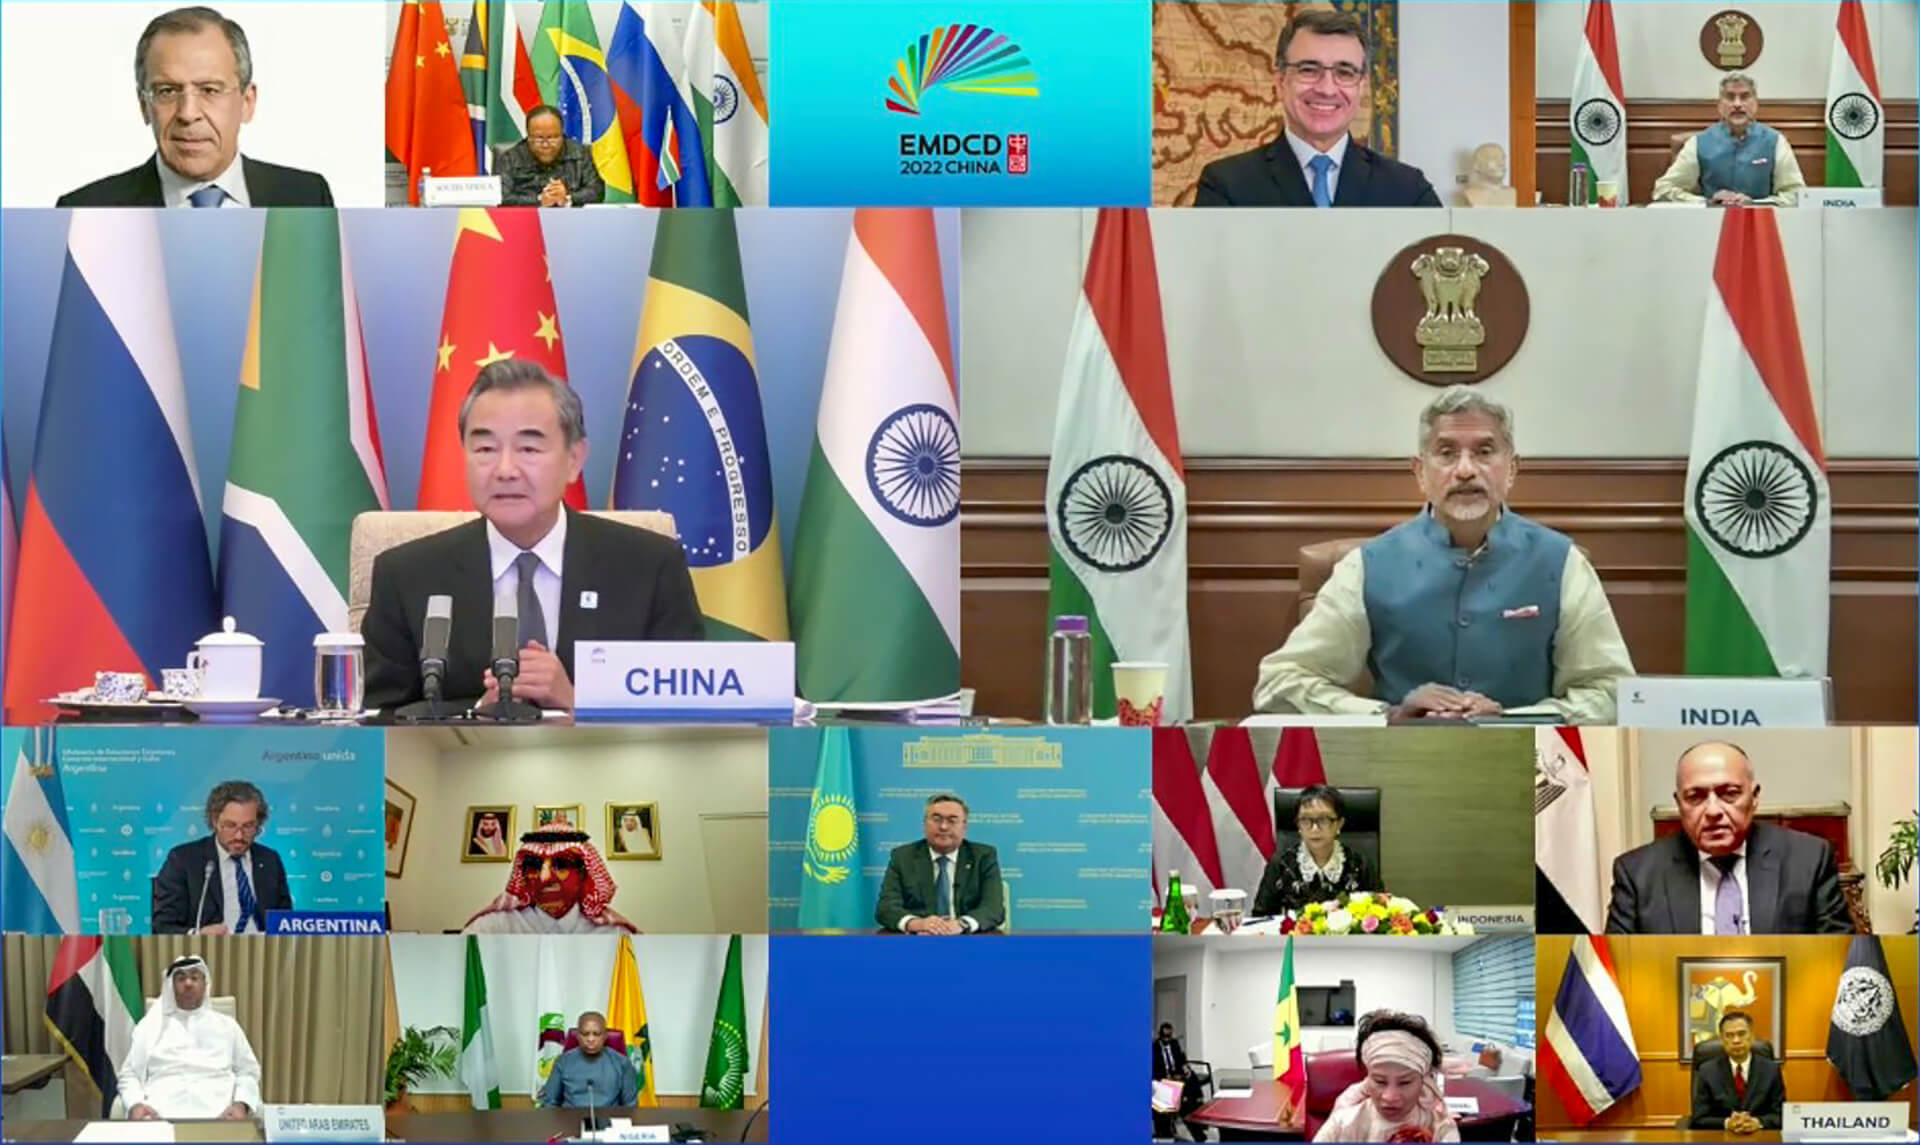 SUMMARY: BRICS Foreign Ministers’ Summit